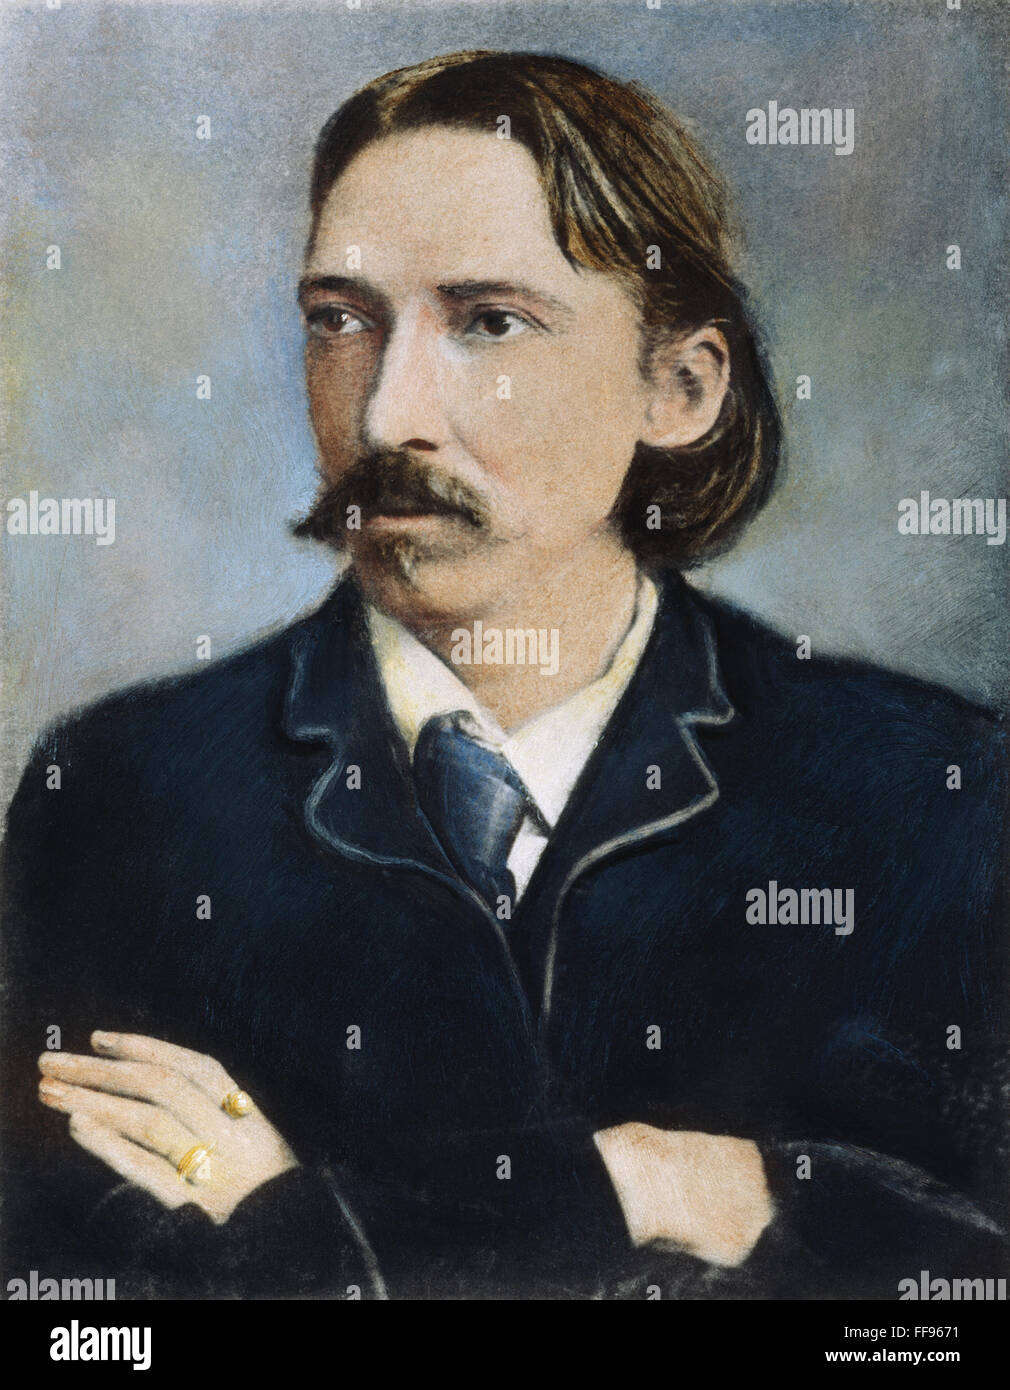 ROBERT LOUIS STEVENSON /n(1850-1894). Scottish essayist, novelist and poet: oil over a photograph, c1888. Stock Photo